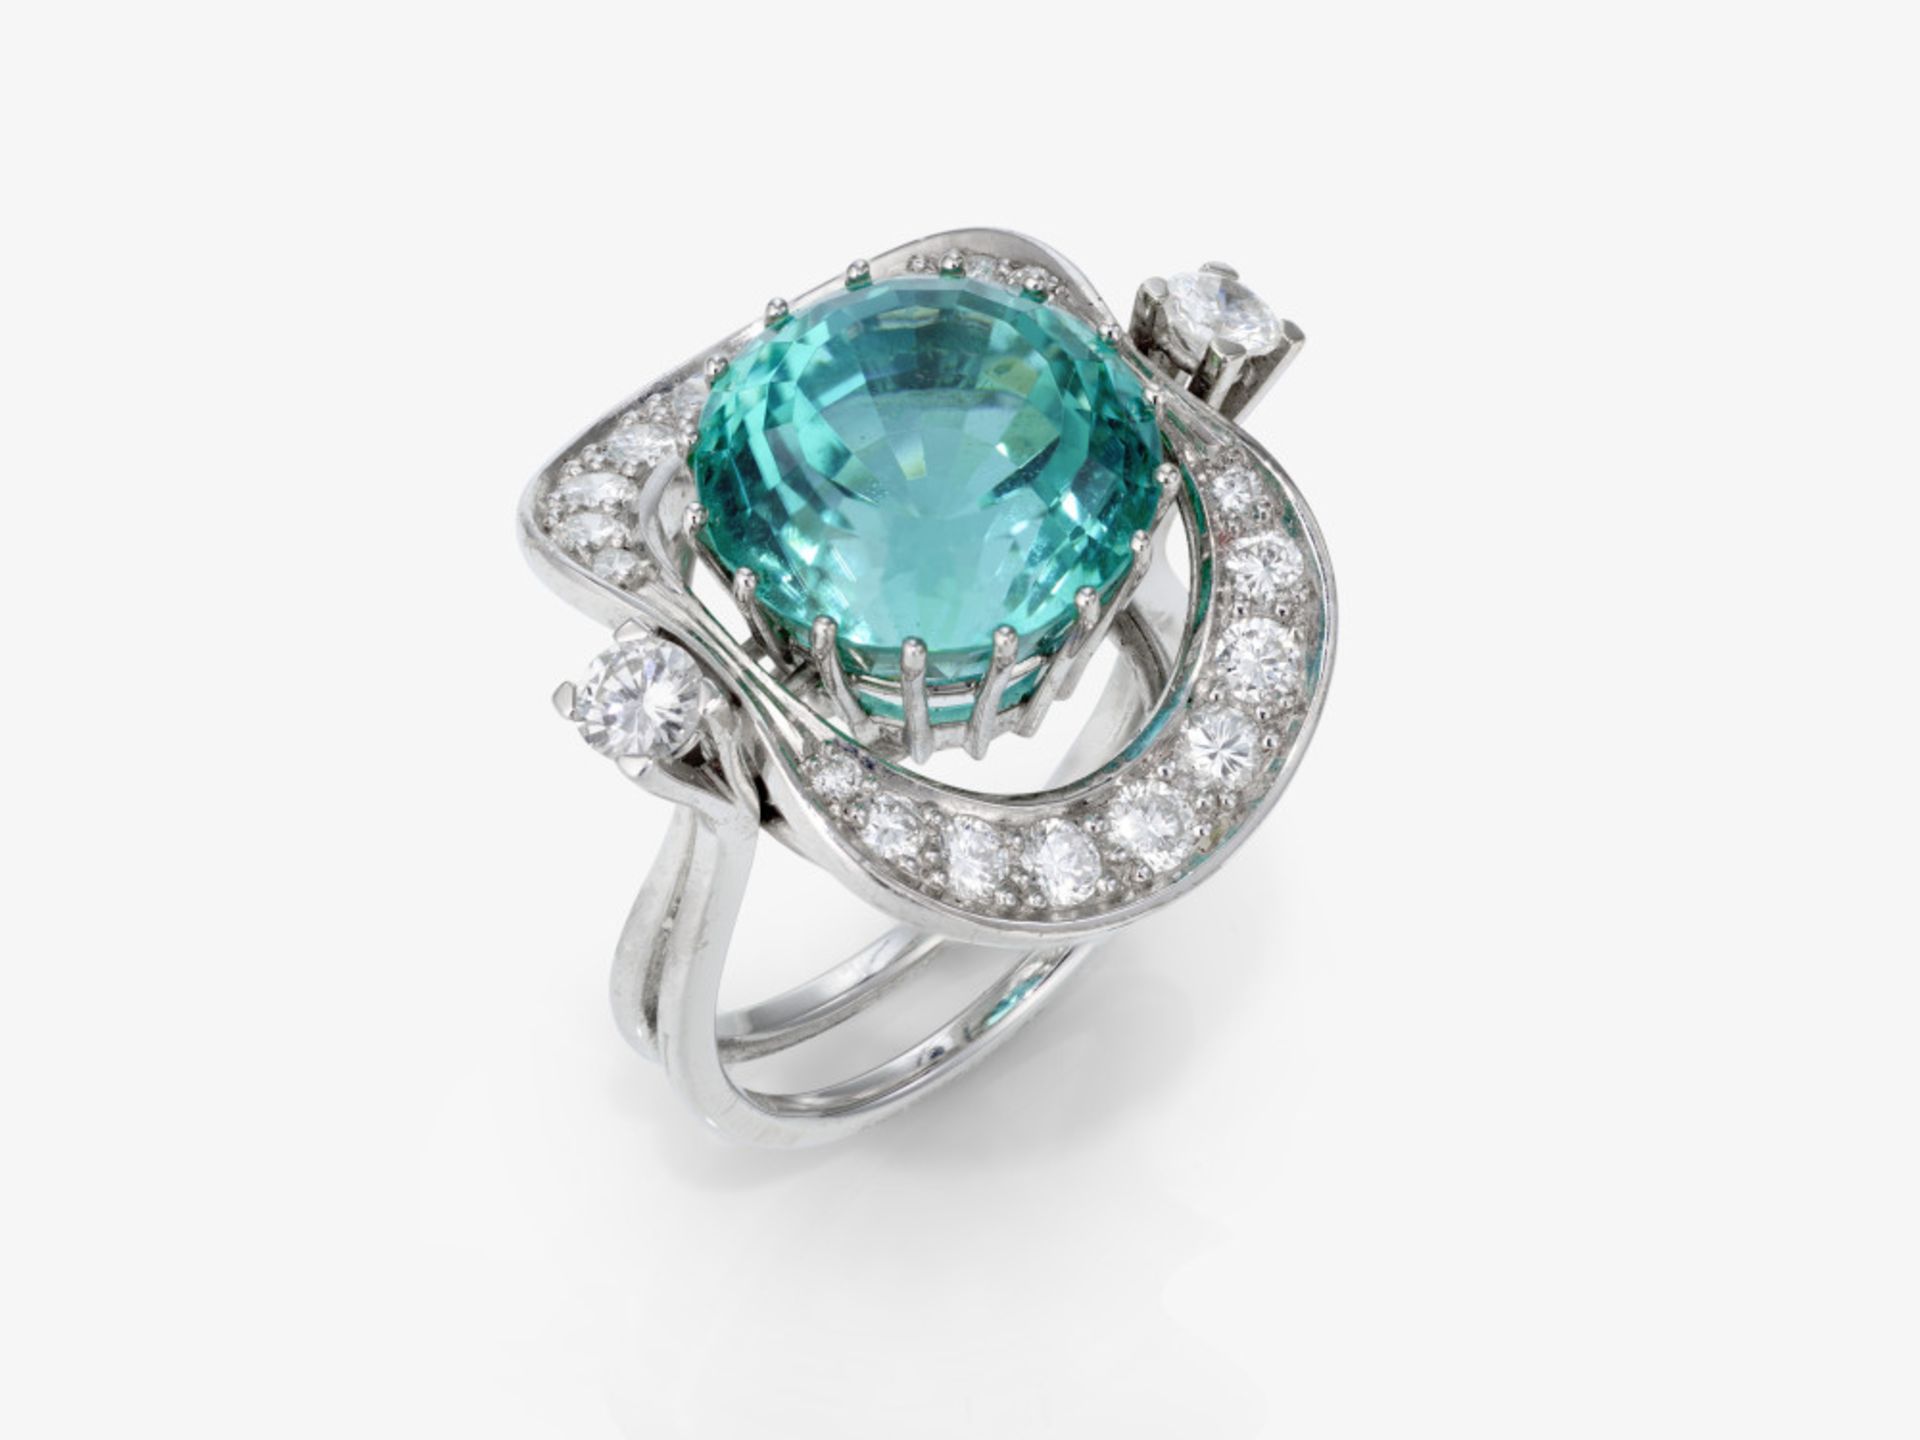 A ring with a Paraiba-coloured tourmaline and brilliant-cut diamonds